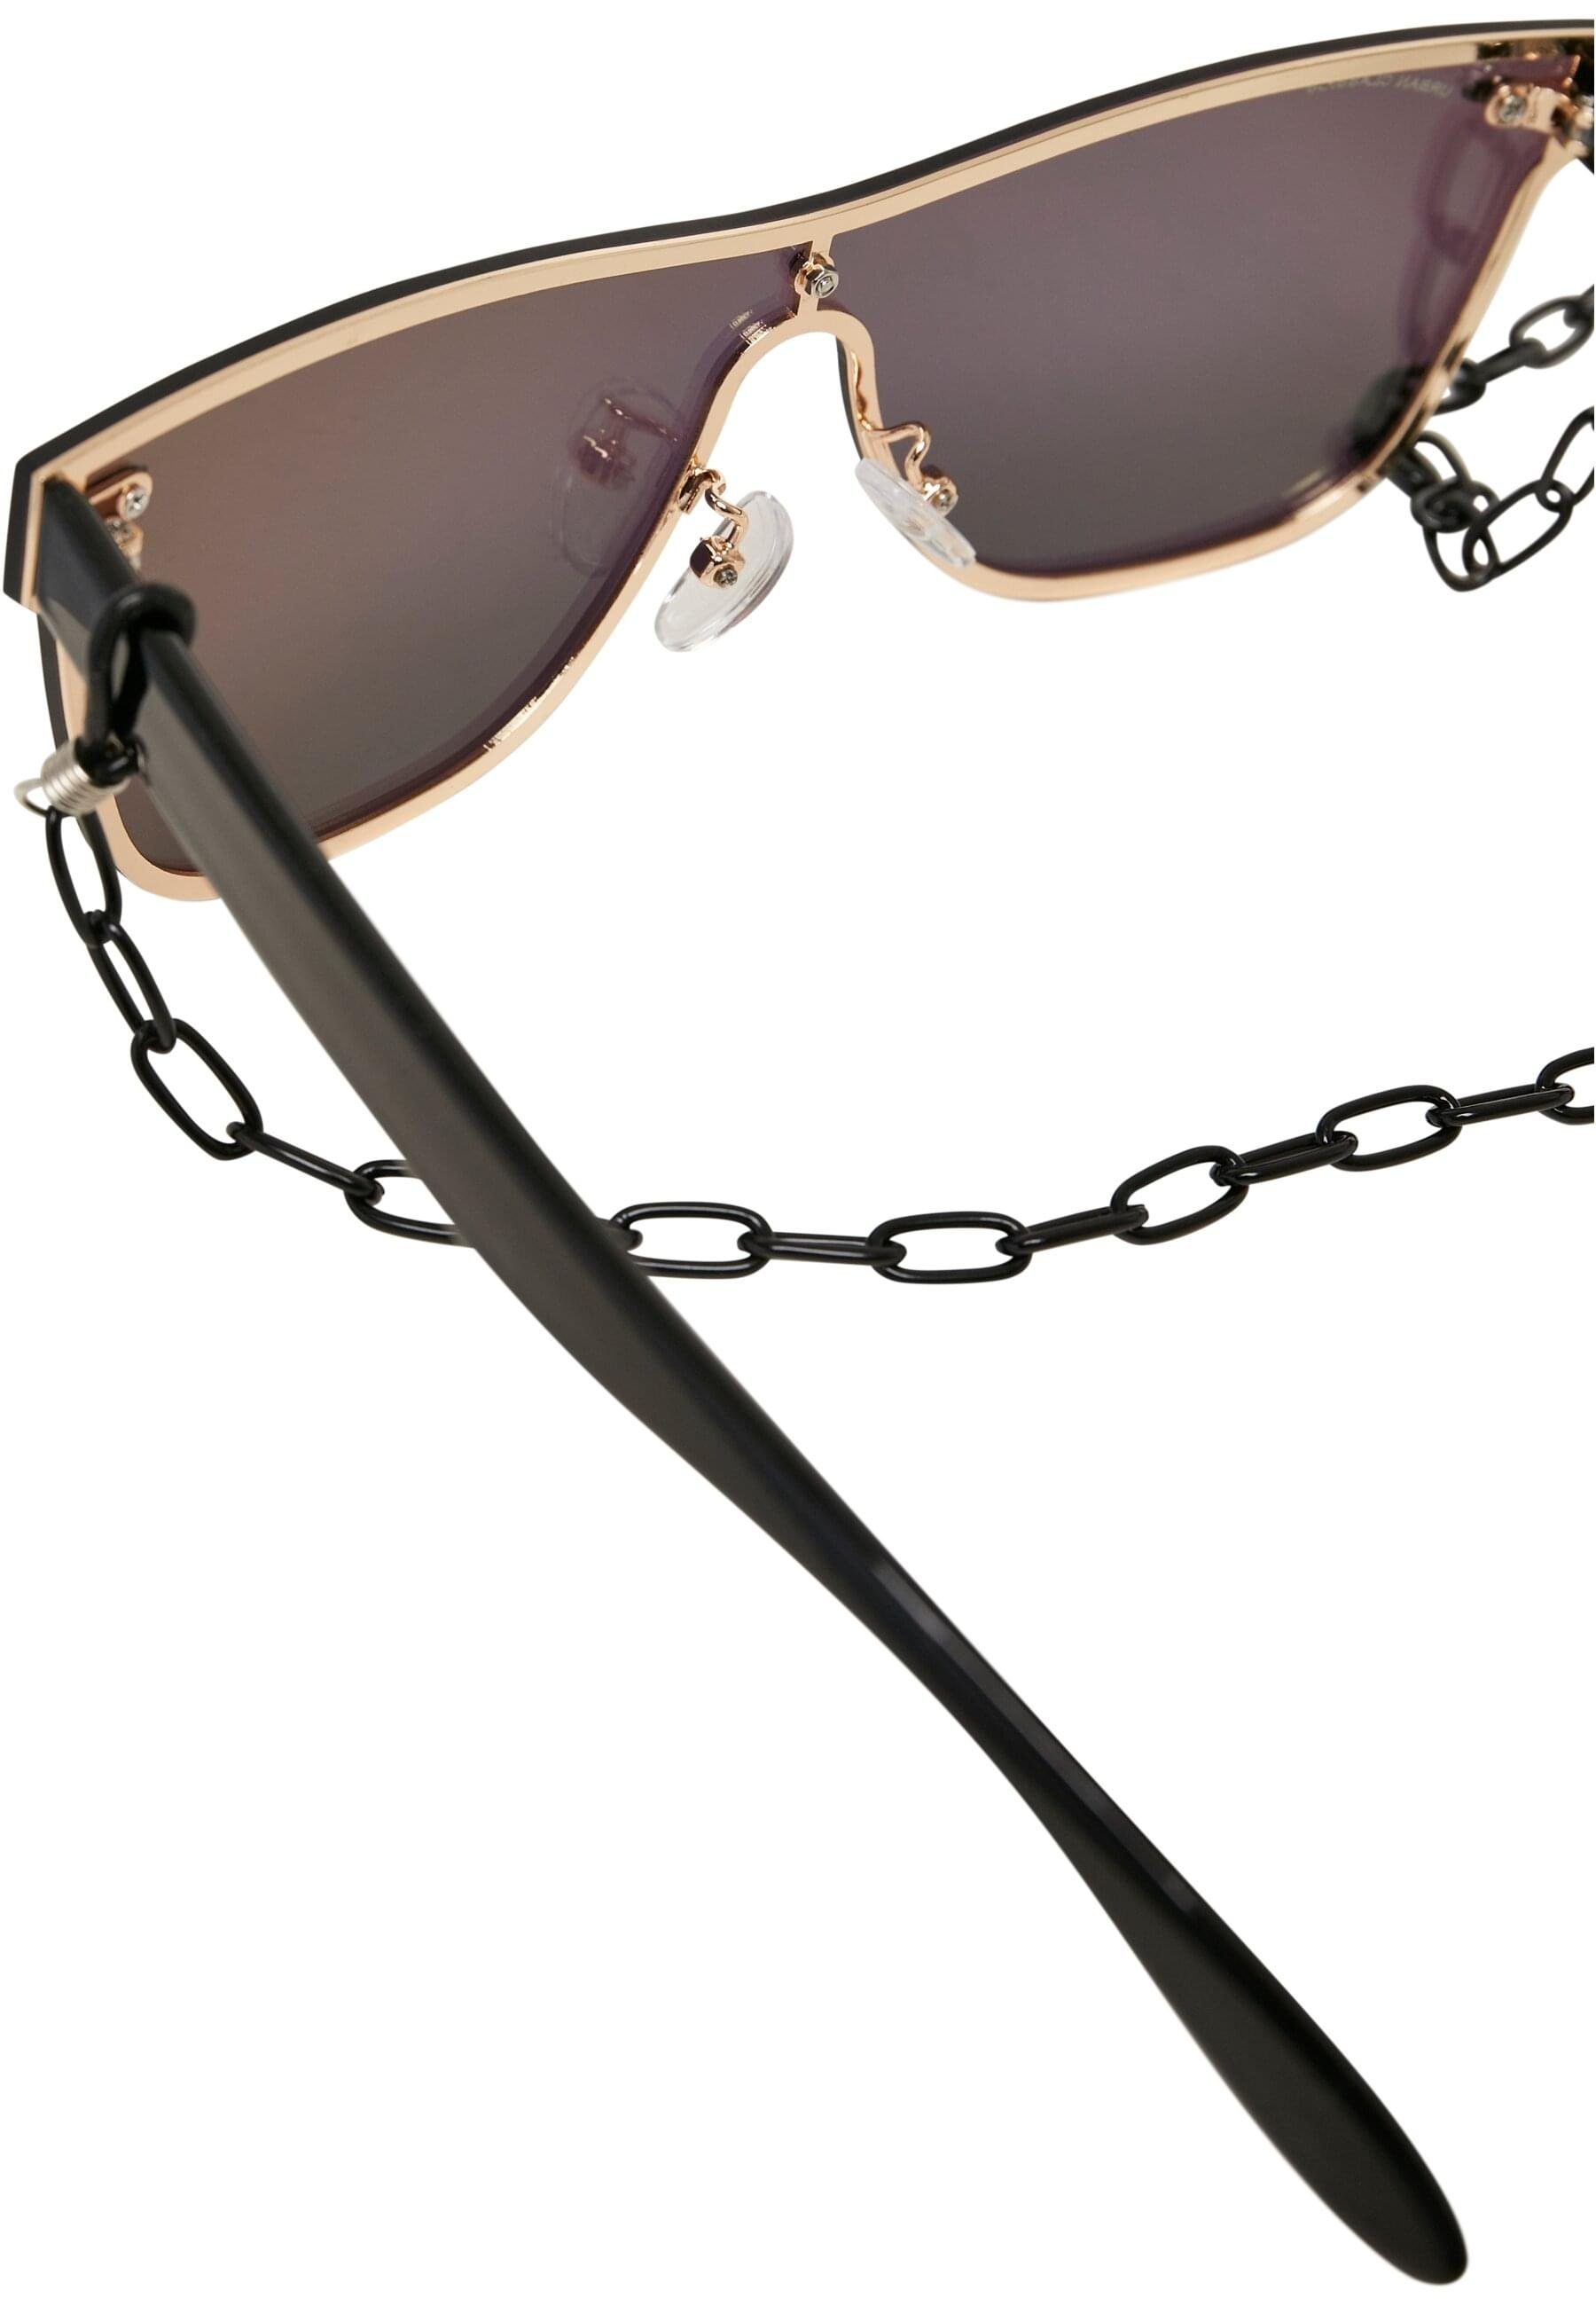 Unisex mirror URBAN 103 Sunglasses black/gold Sonnenbrille CLASSICS Chain